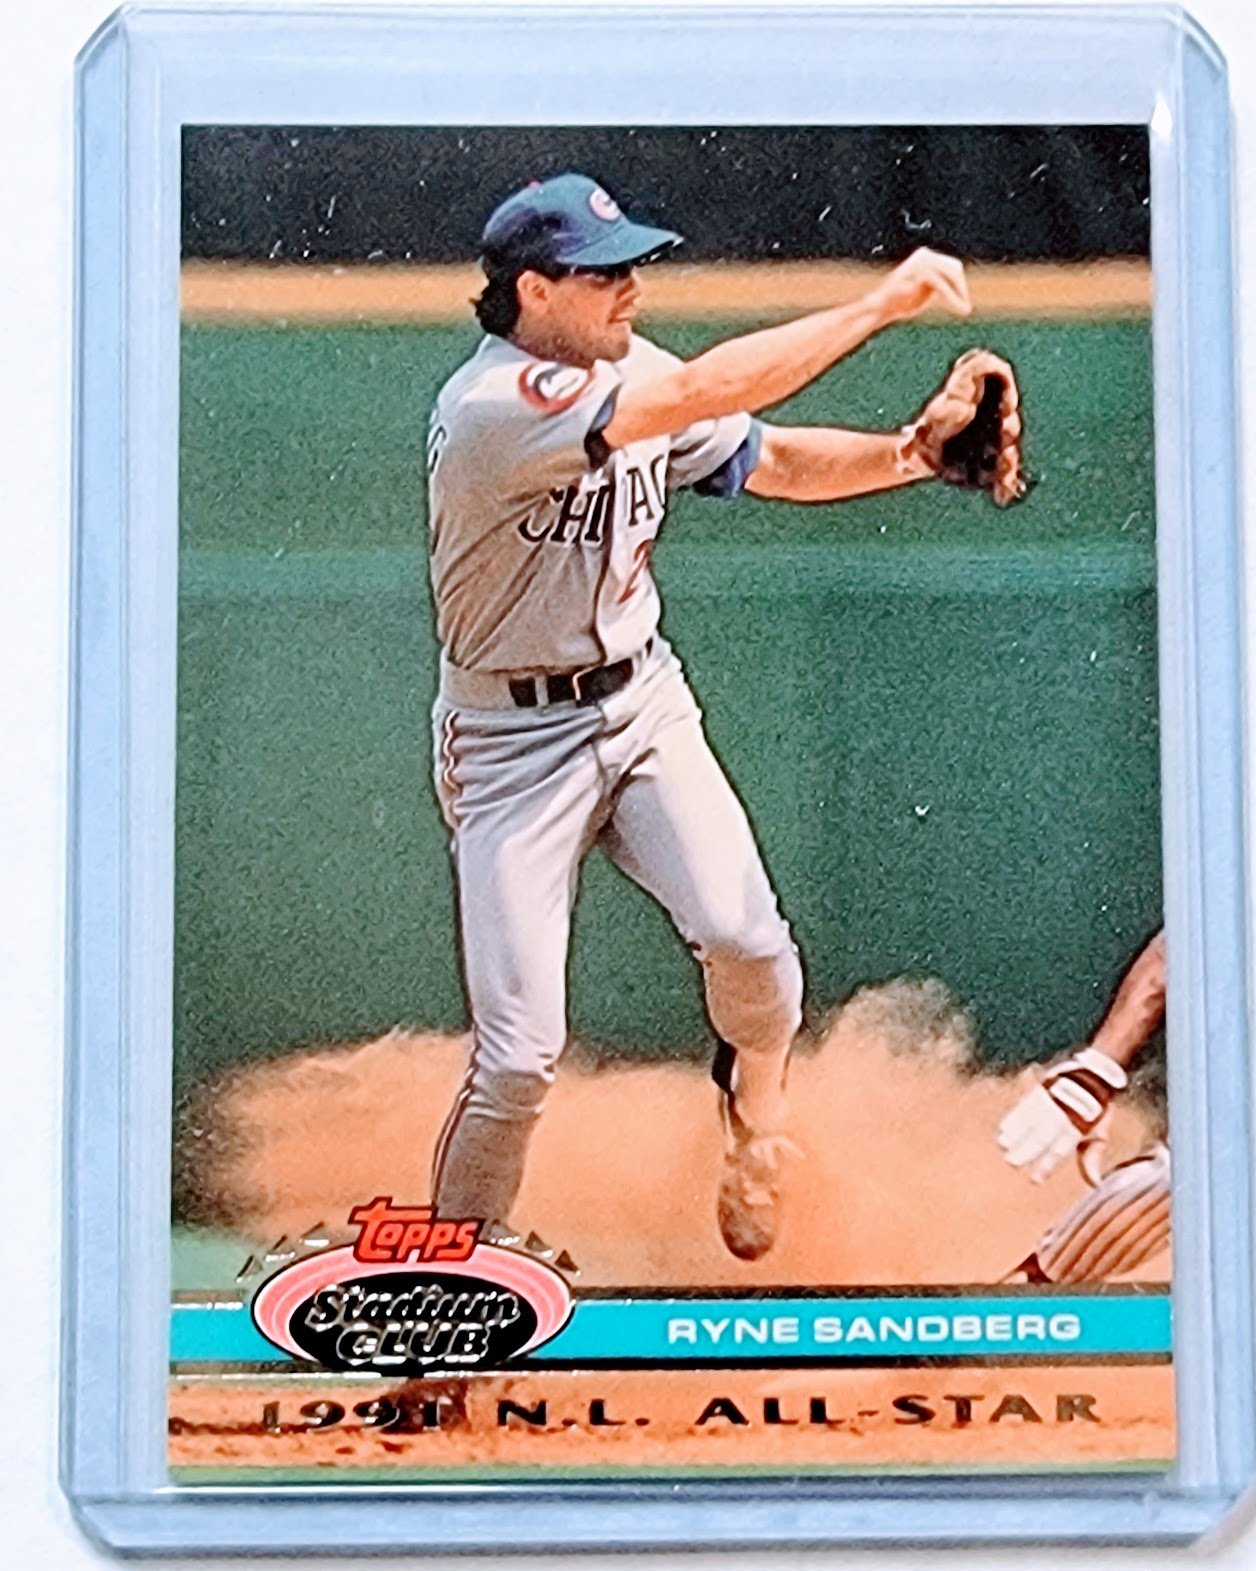 1992 Topps Stadium Club Dome Ryne Sandberg 1991 All Star MLB Baseball Trading Card TPTV simple Xclusive Collectibles   